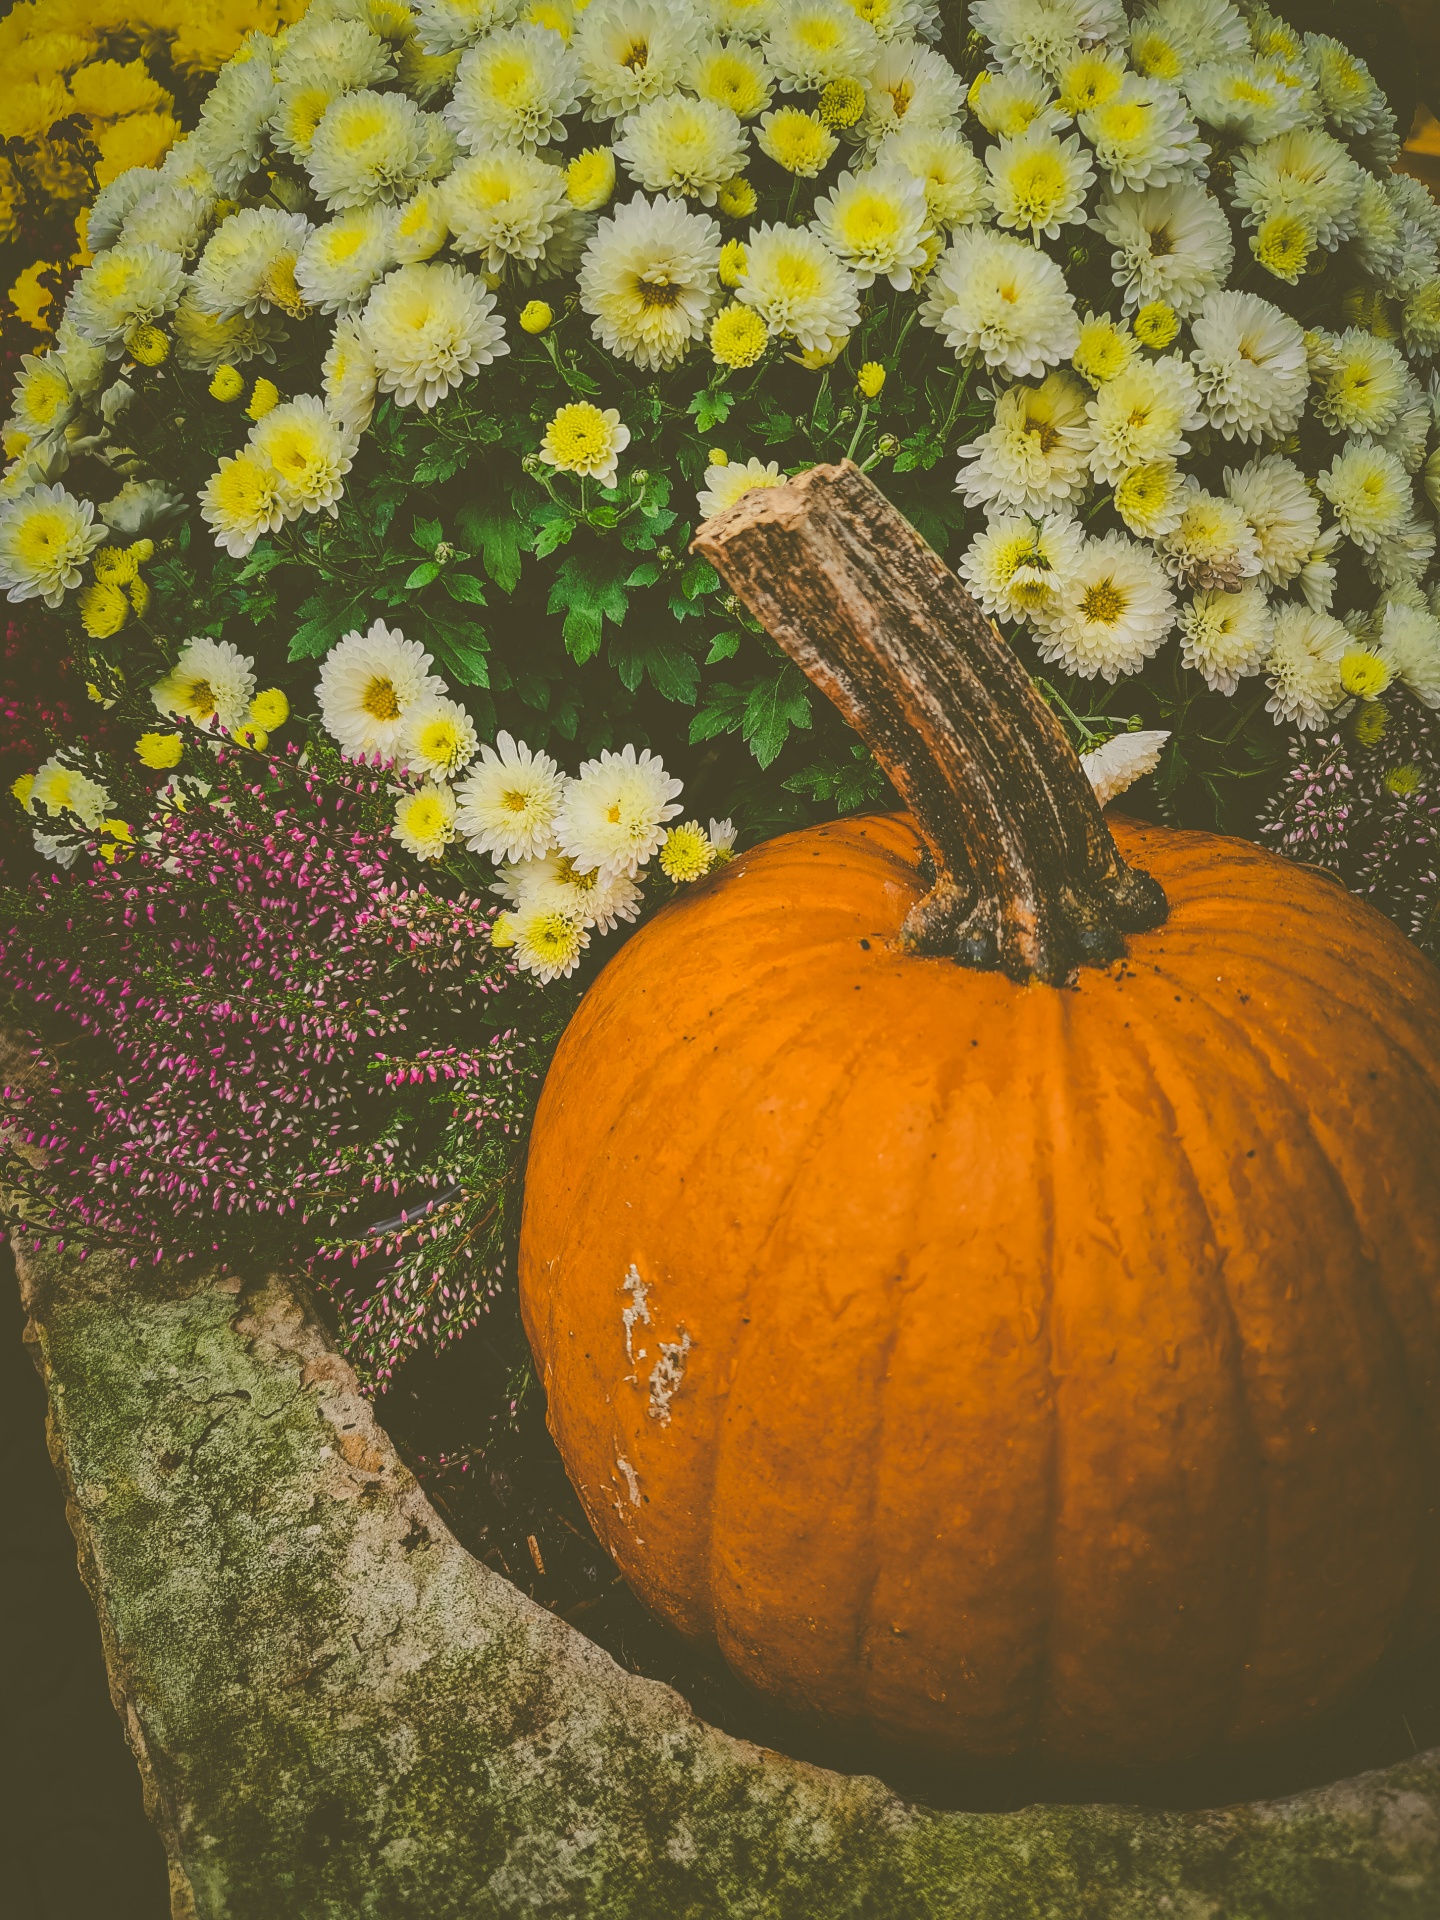 Pumpkin And Flowers